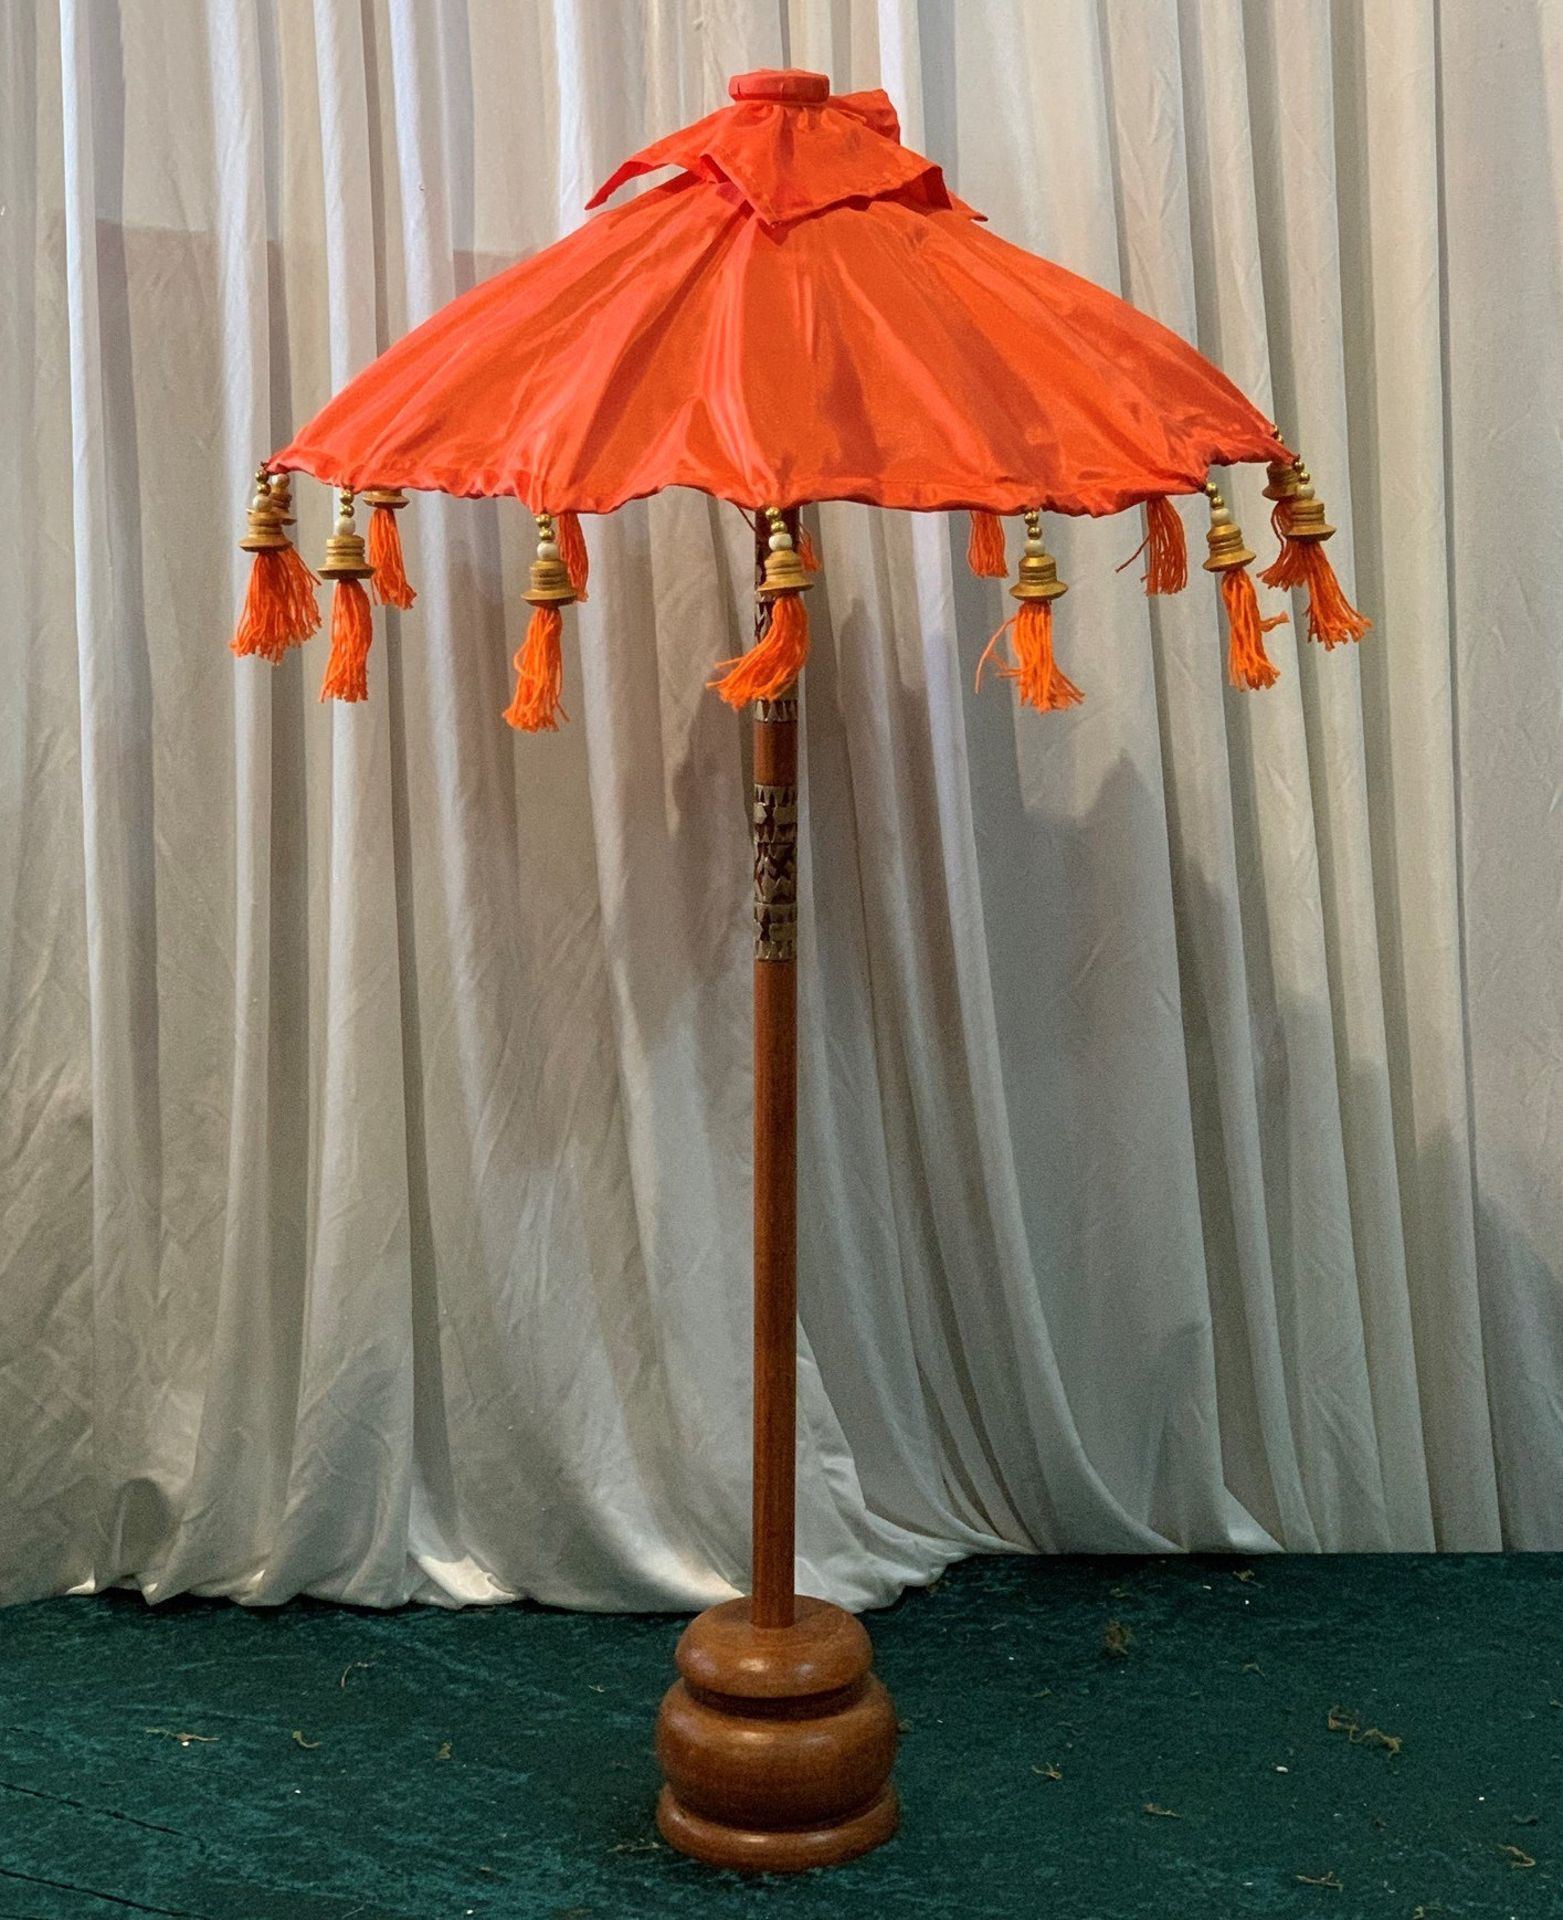 2 x Balinese Umbrellas - Dimensions: 81x48cm - Ref: Lot 85 - CL548 - Location: Near Market